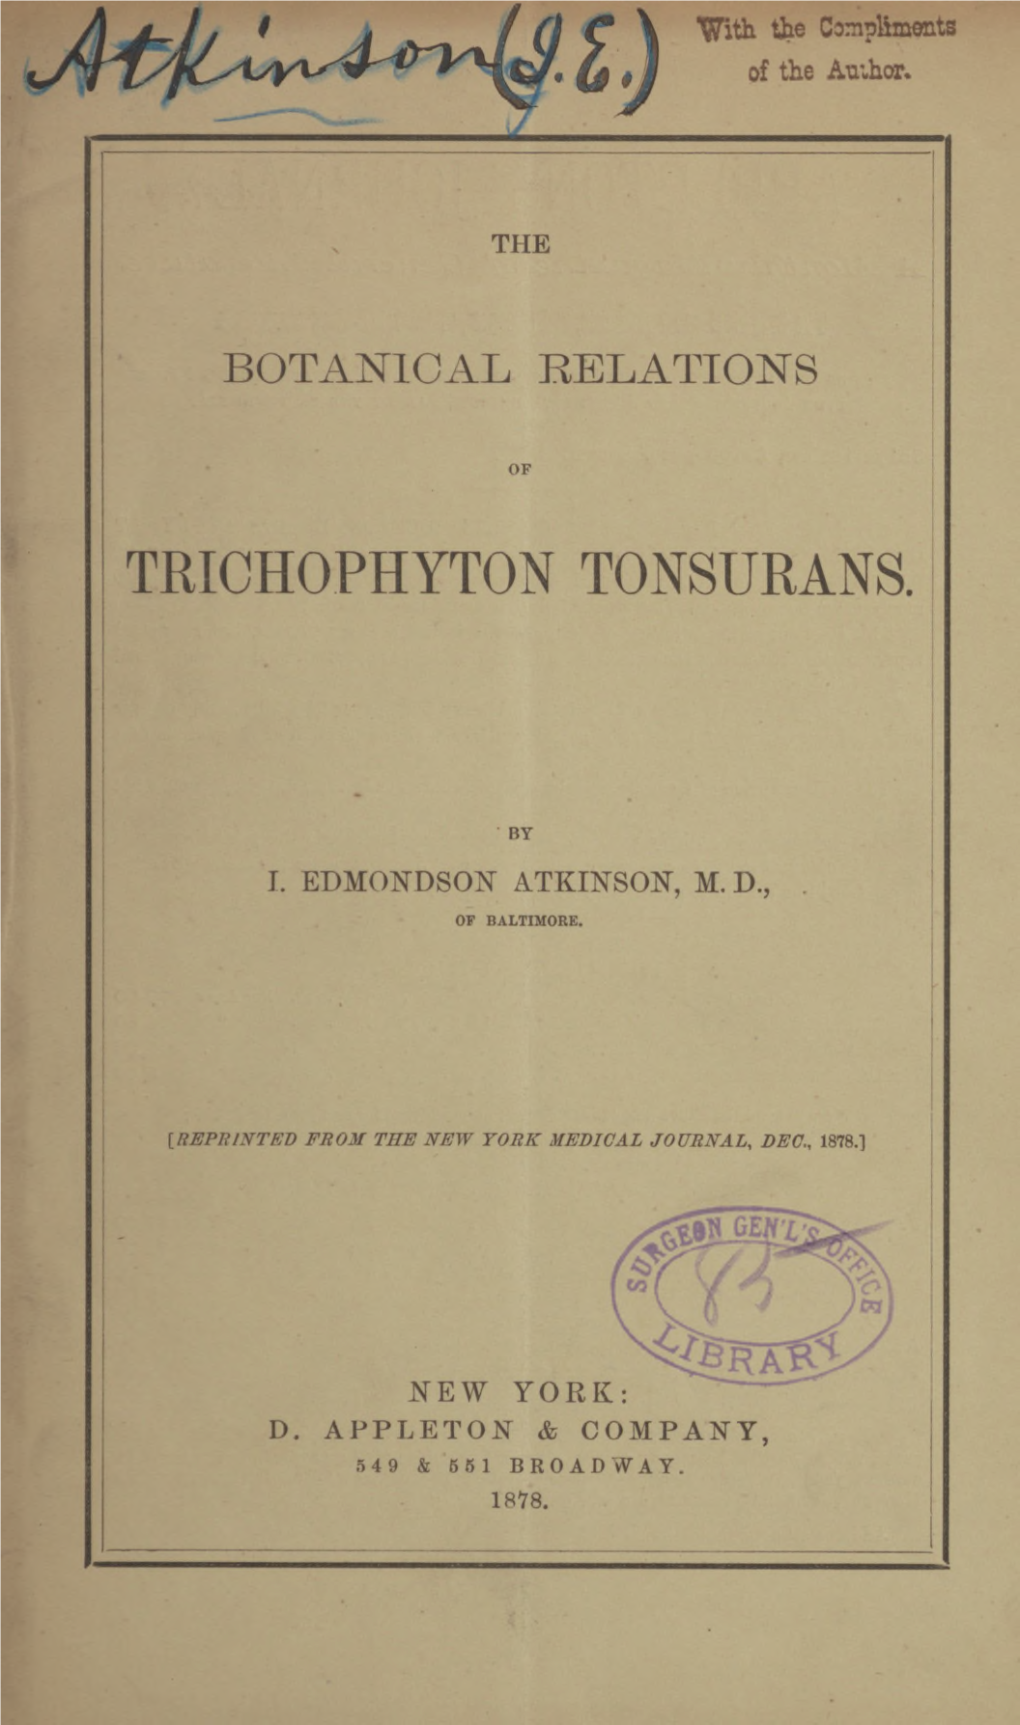 The Botanical Relations of Trichophyton Tonsurans